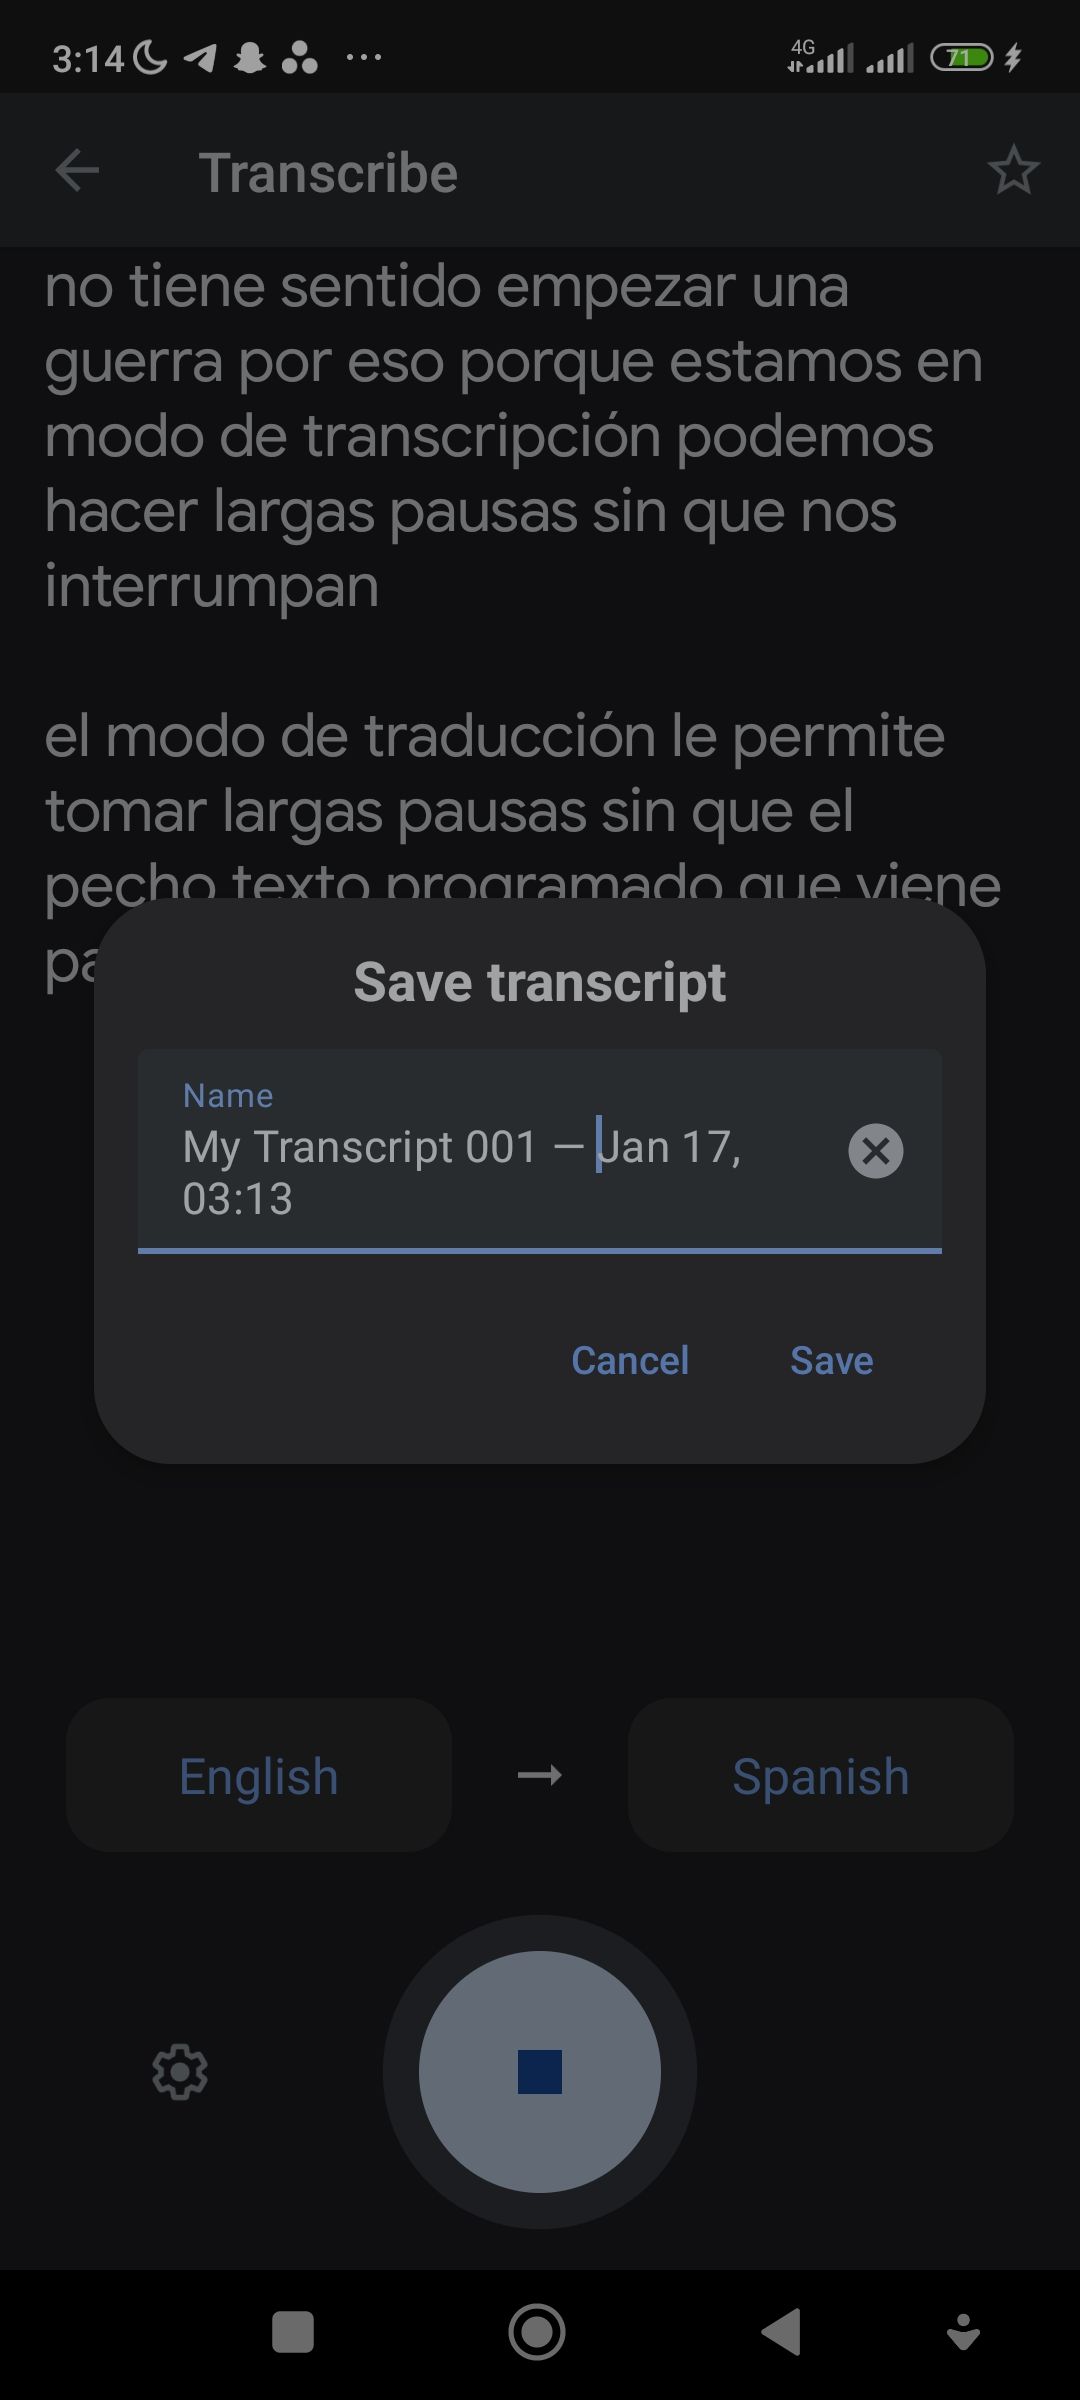 Saving a transcription on the Google Translate app